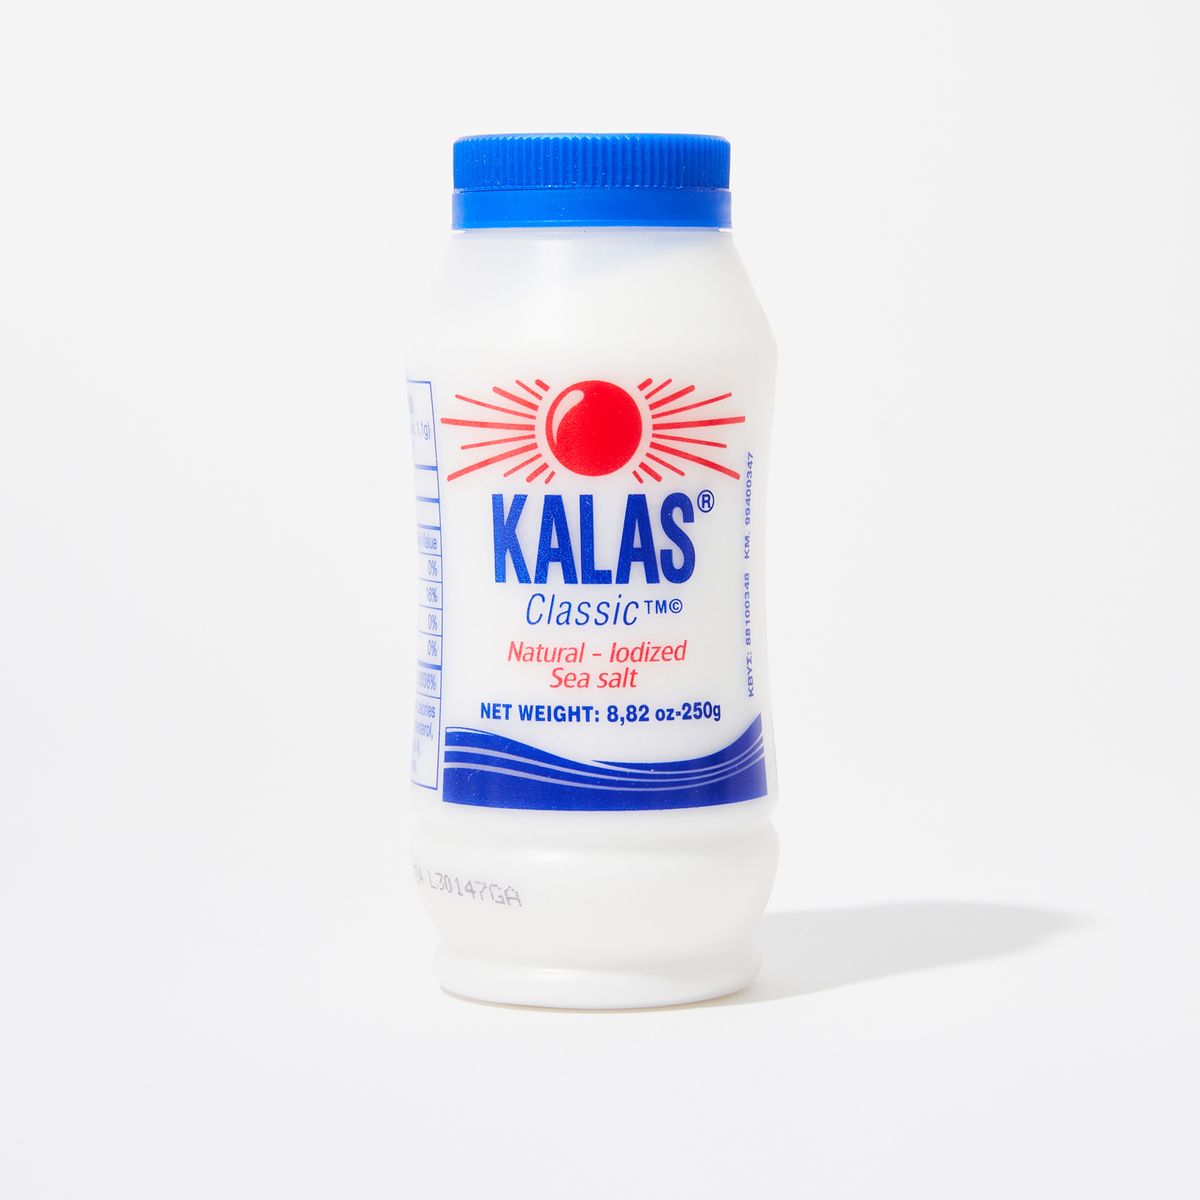 Translucent plastic bottle with a blue lid that reads "Kalas" "Classic" "Natural - Iodized Sea Salt"